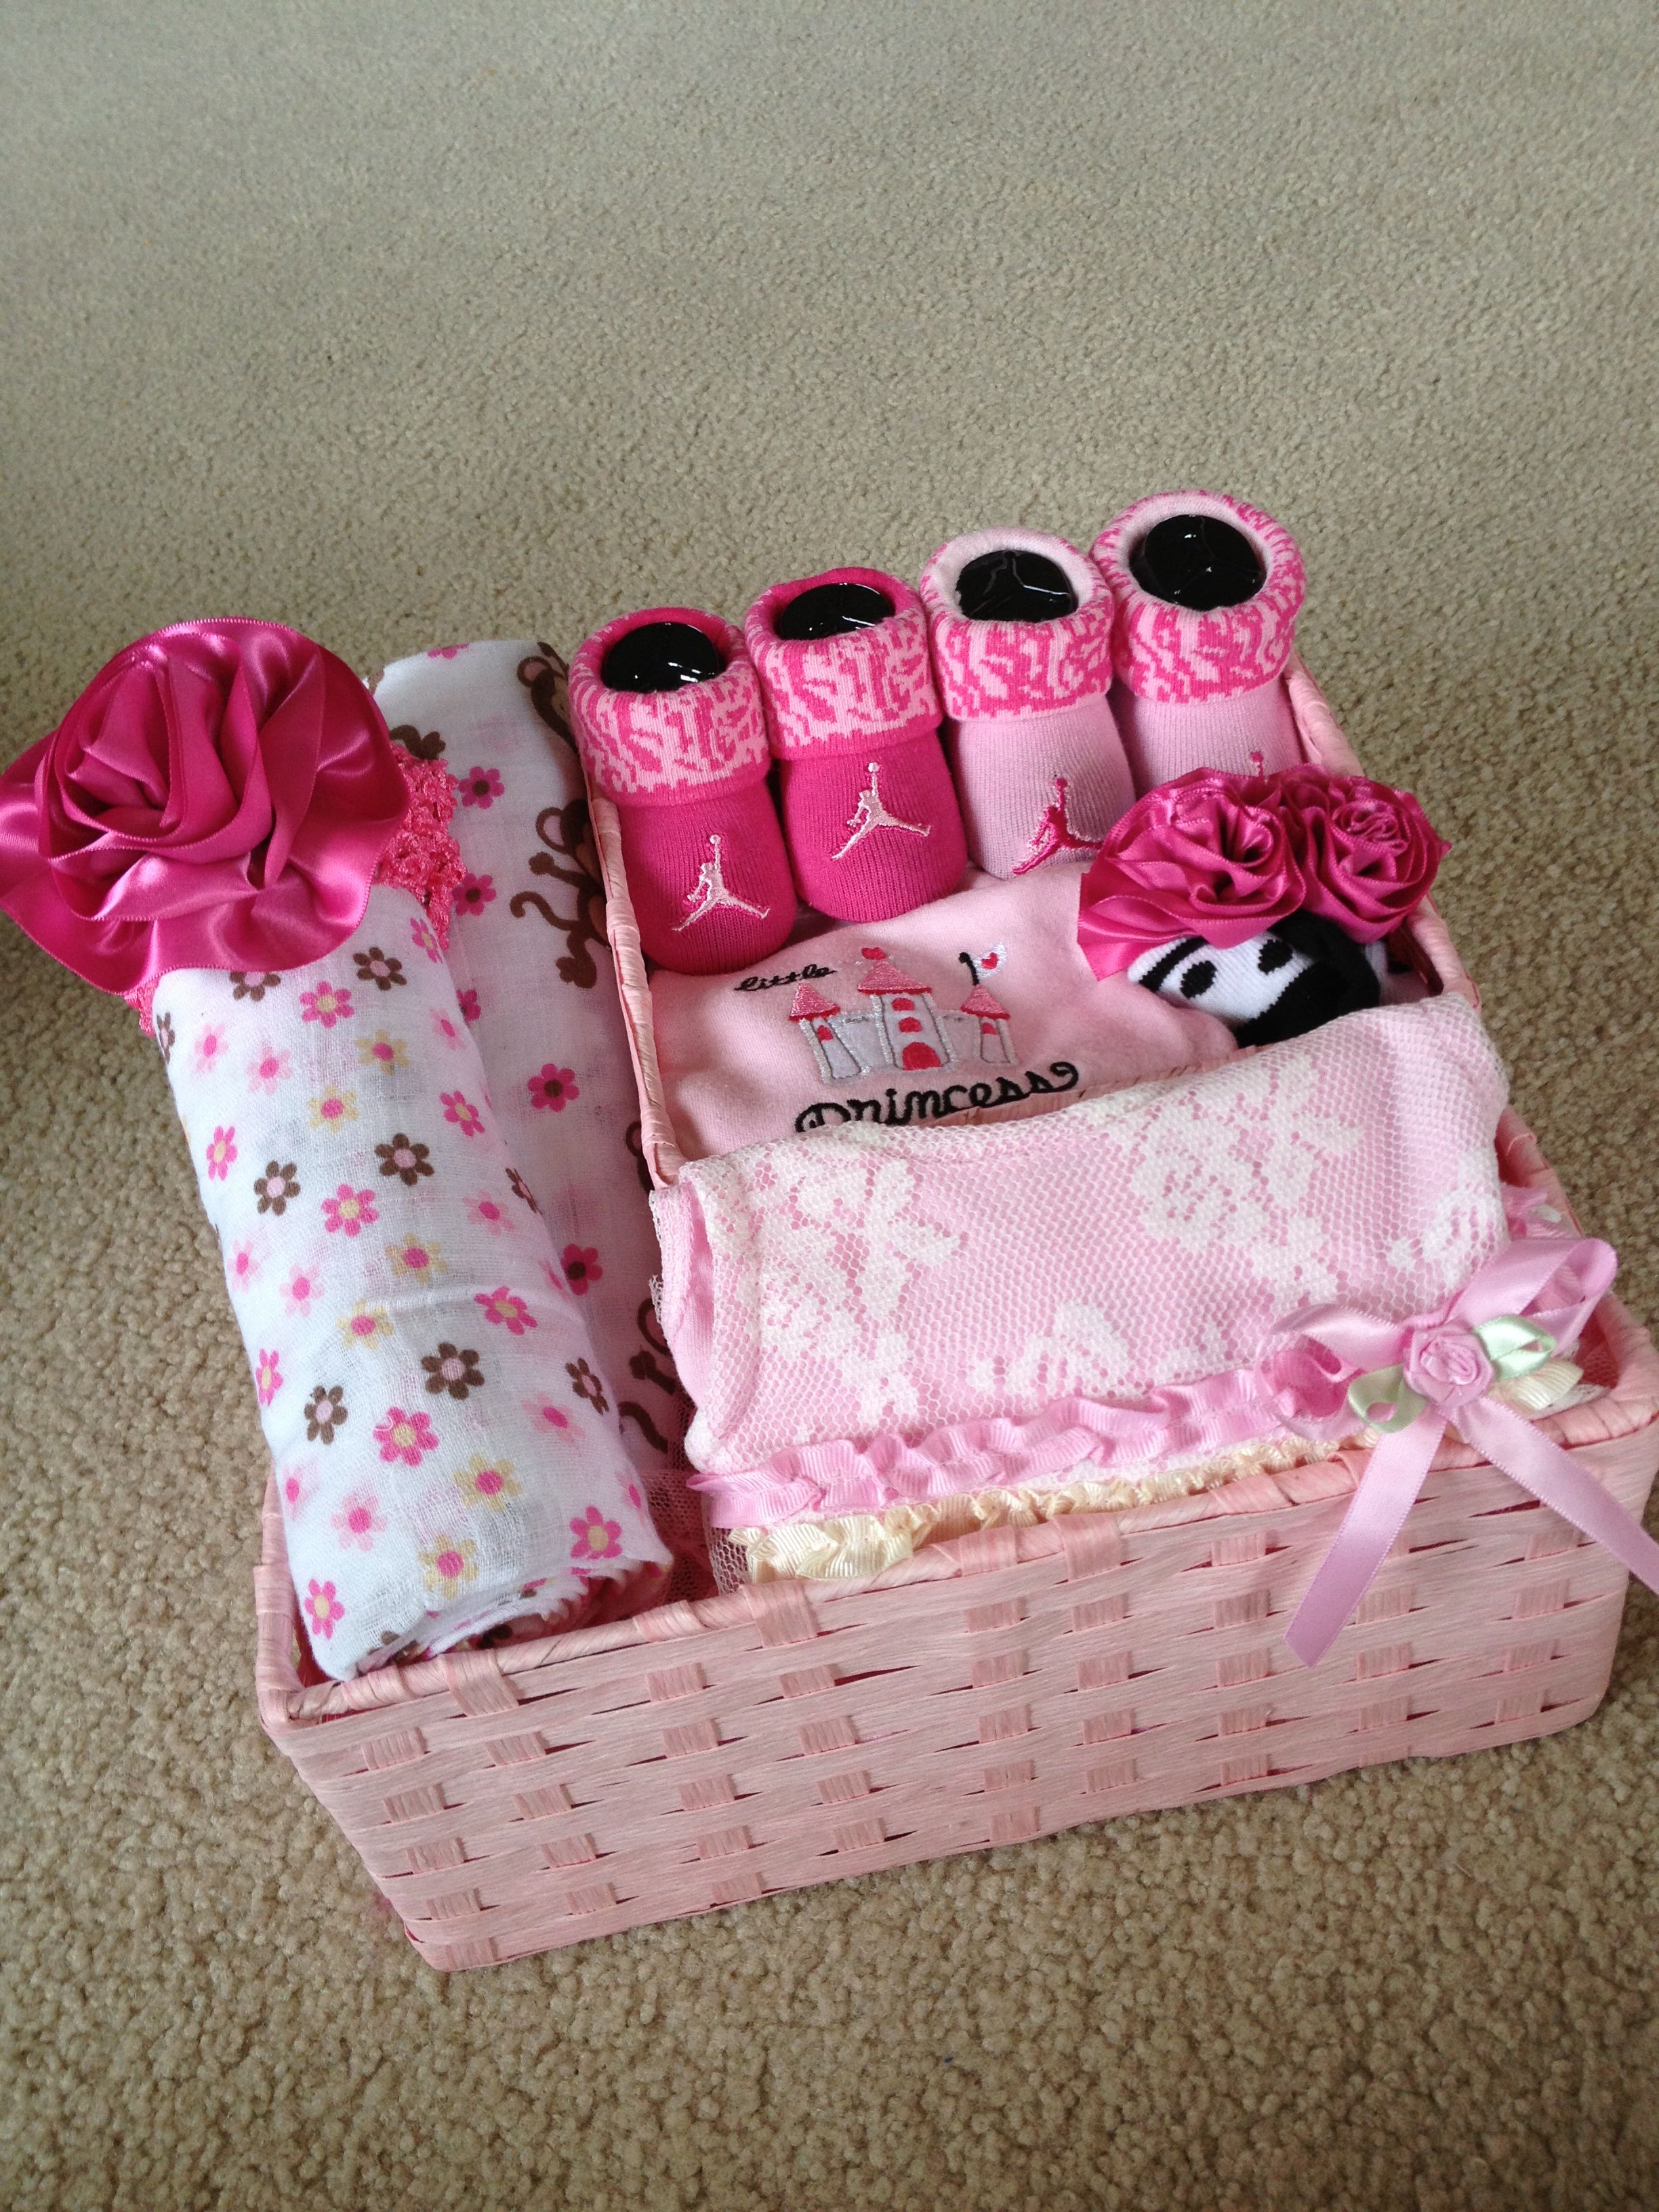 Baby girl gift basket | Gift baskets | Pinterest | Baby girl gift ...